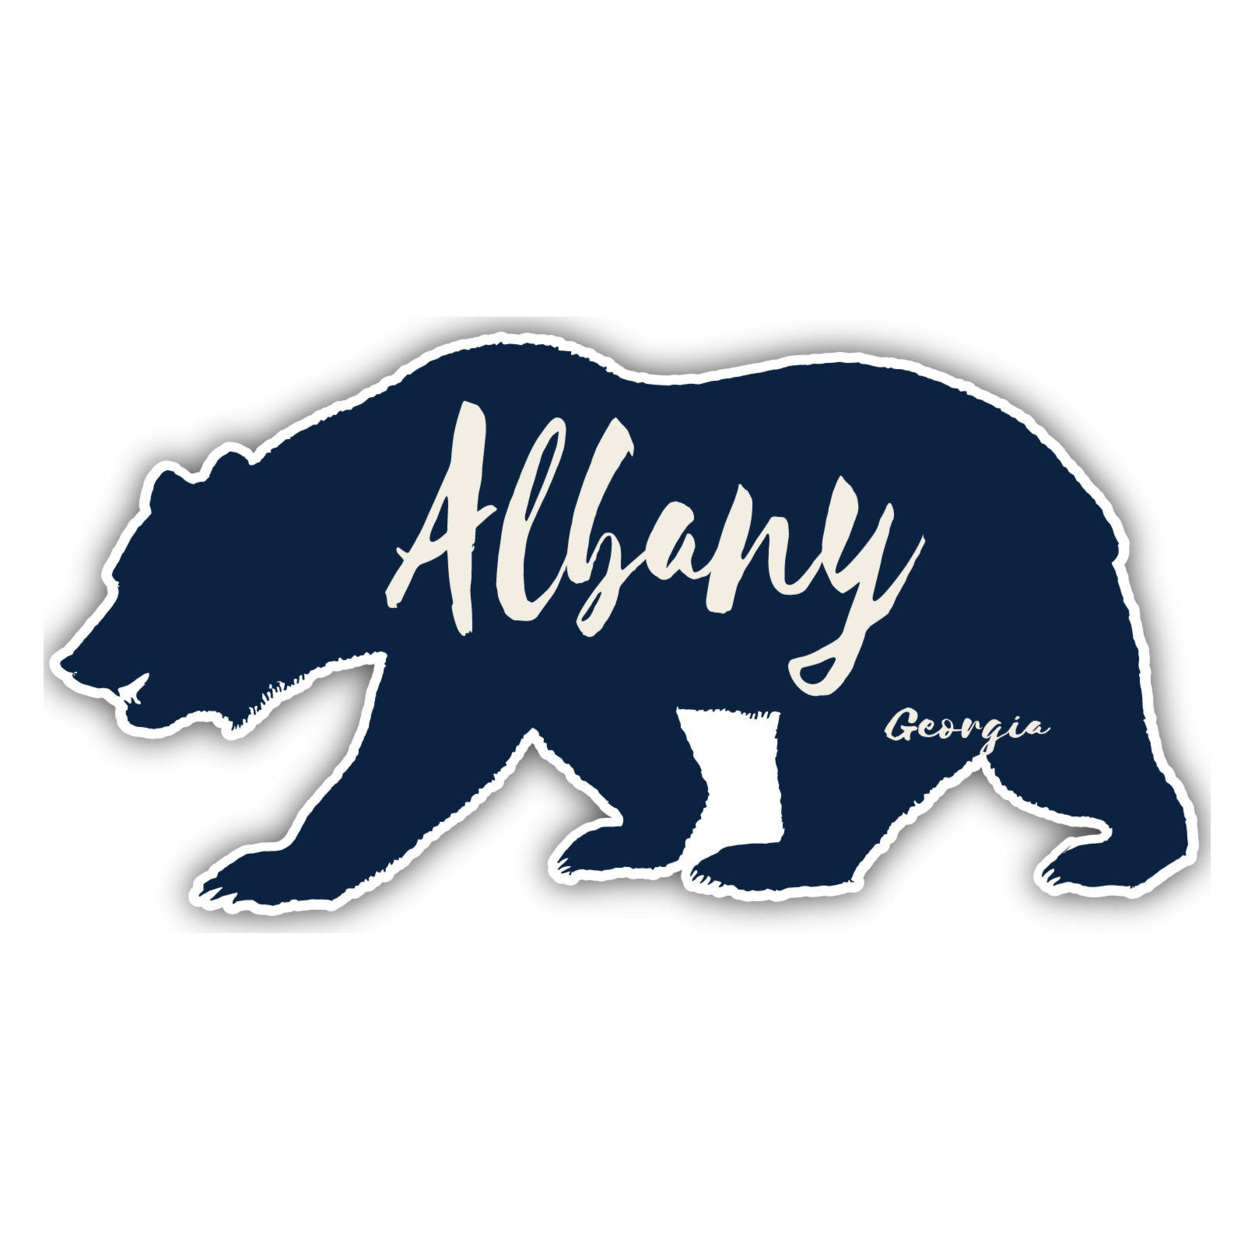 Albany Georgia Souvenir Decorative Stickers (Choose Theme And Size) - Single Unit, 4-Inch, Camp Life